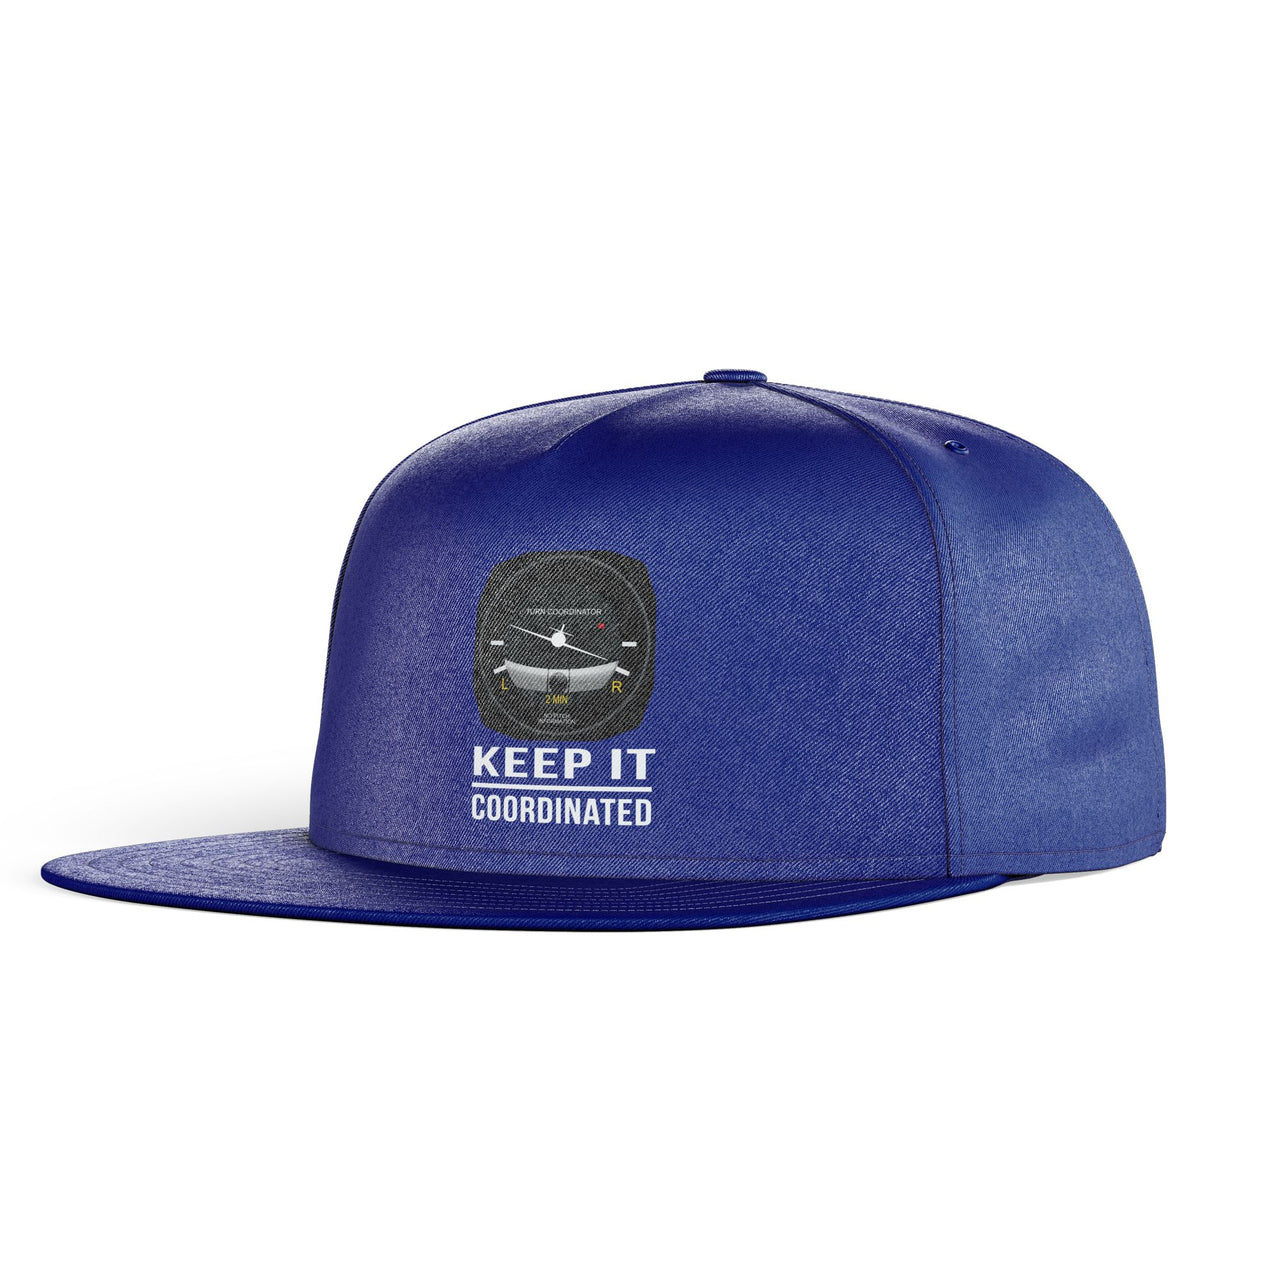 Keep It Coordinated Designed Snapback Caps & Hats